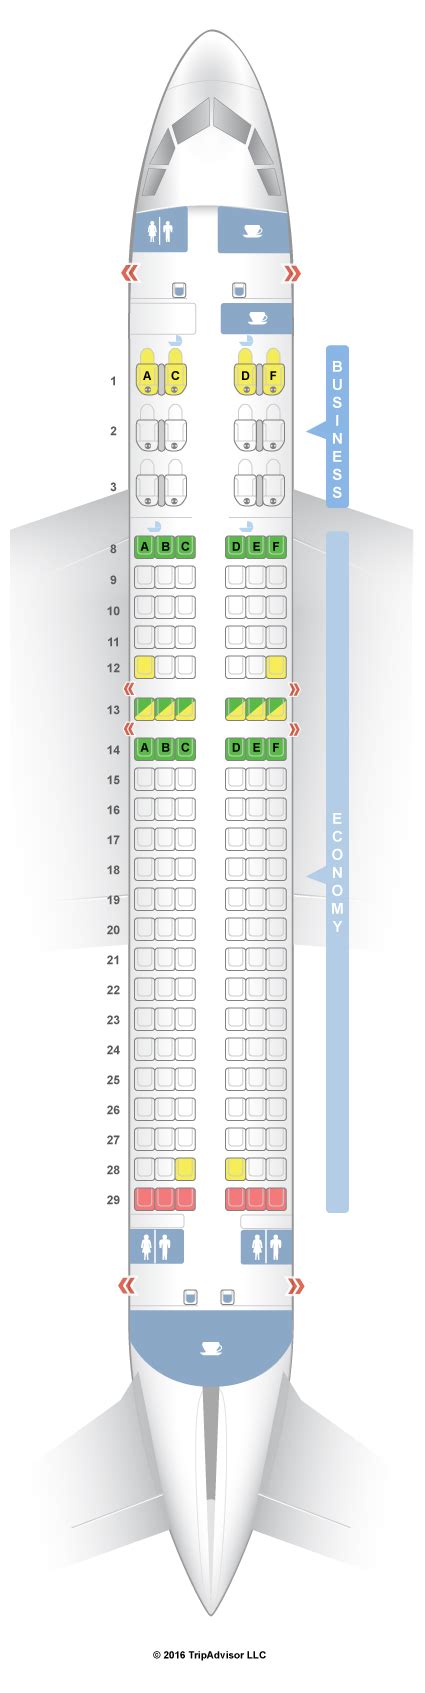 Seatguru Seat Map Qatar Airways Airbus A320 320 V1